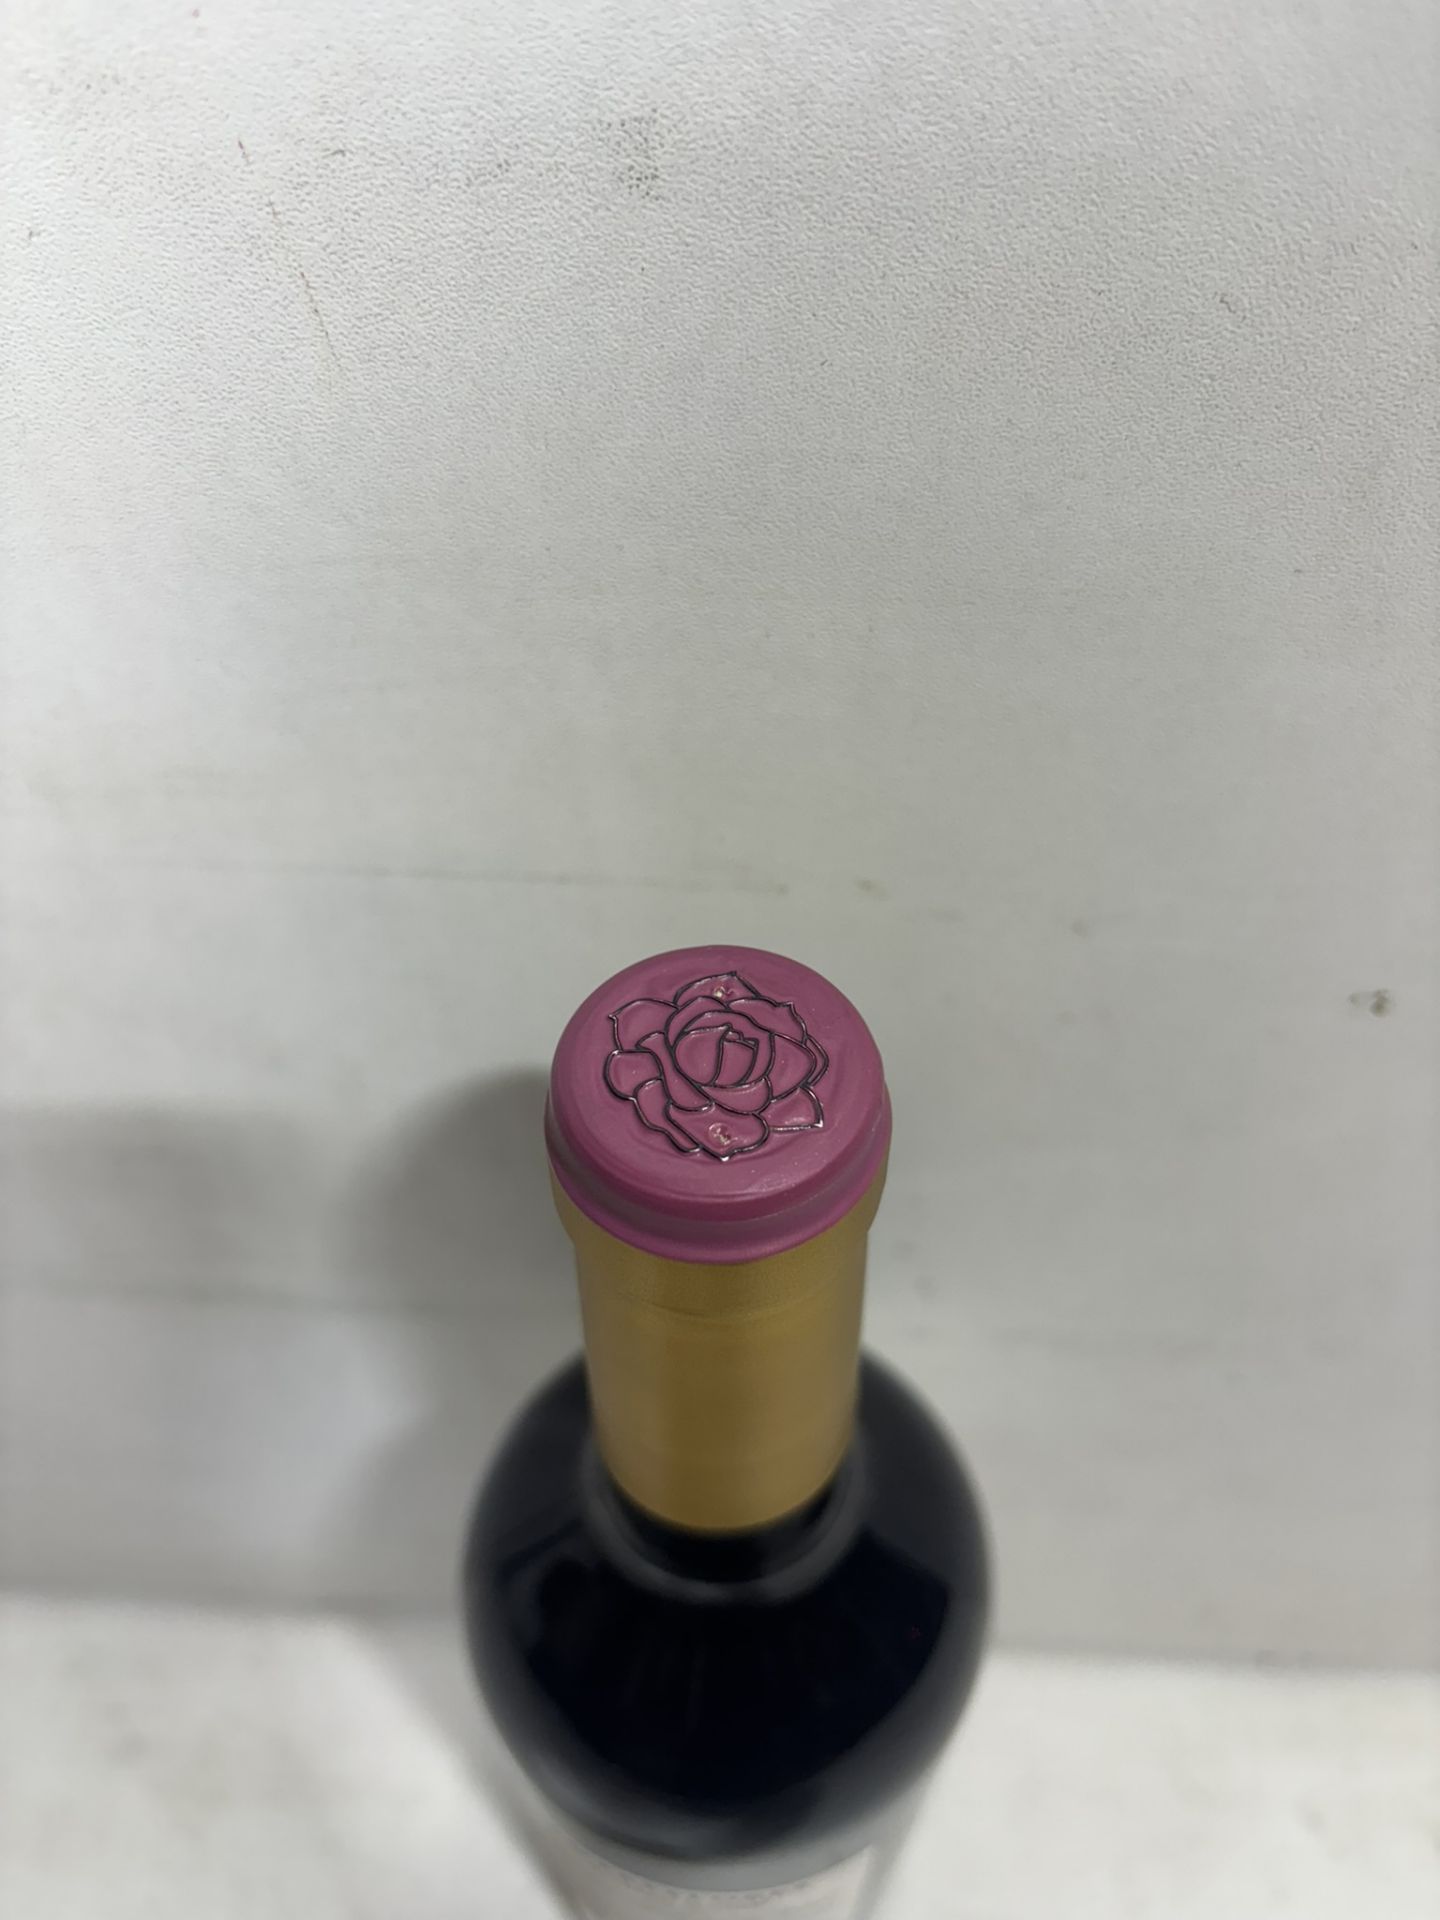 10 X Bottles Of Entreflores Rioja Crianza 2018 75Cl Tempranillo Intense Red Wine - Image 4 of 4